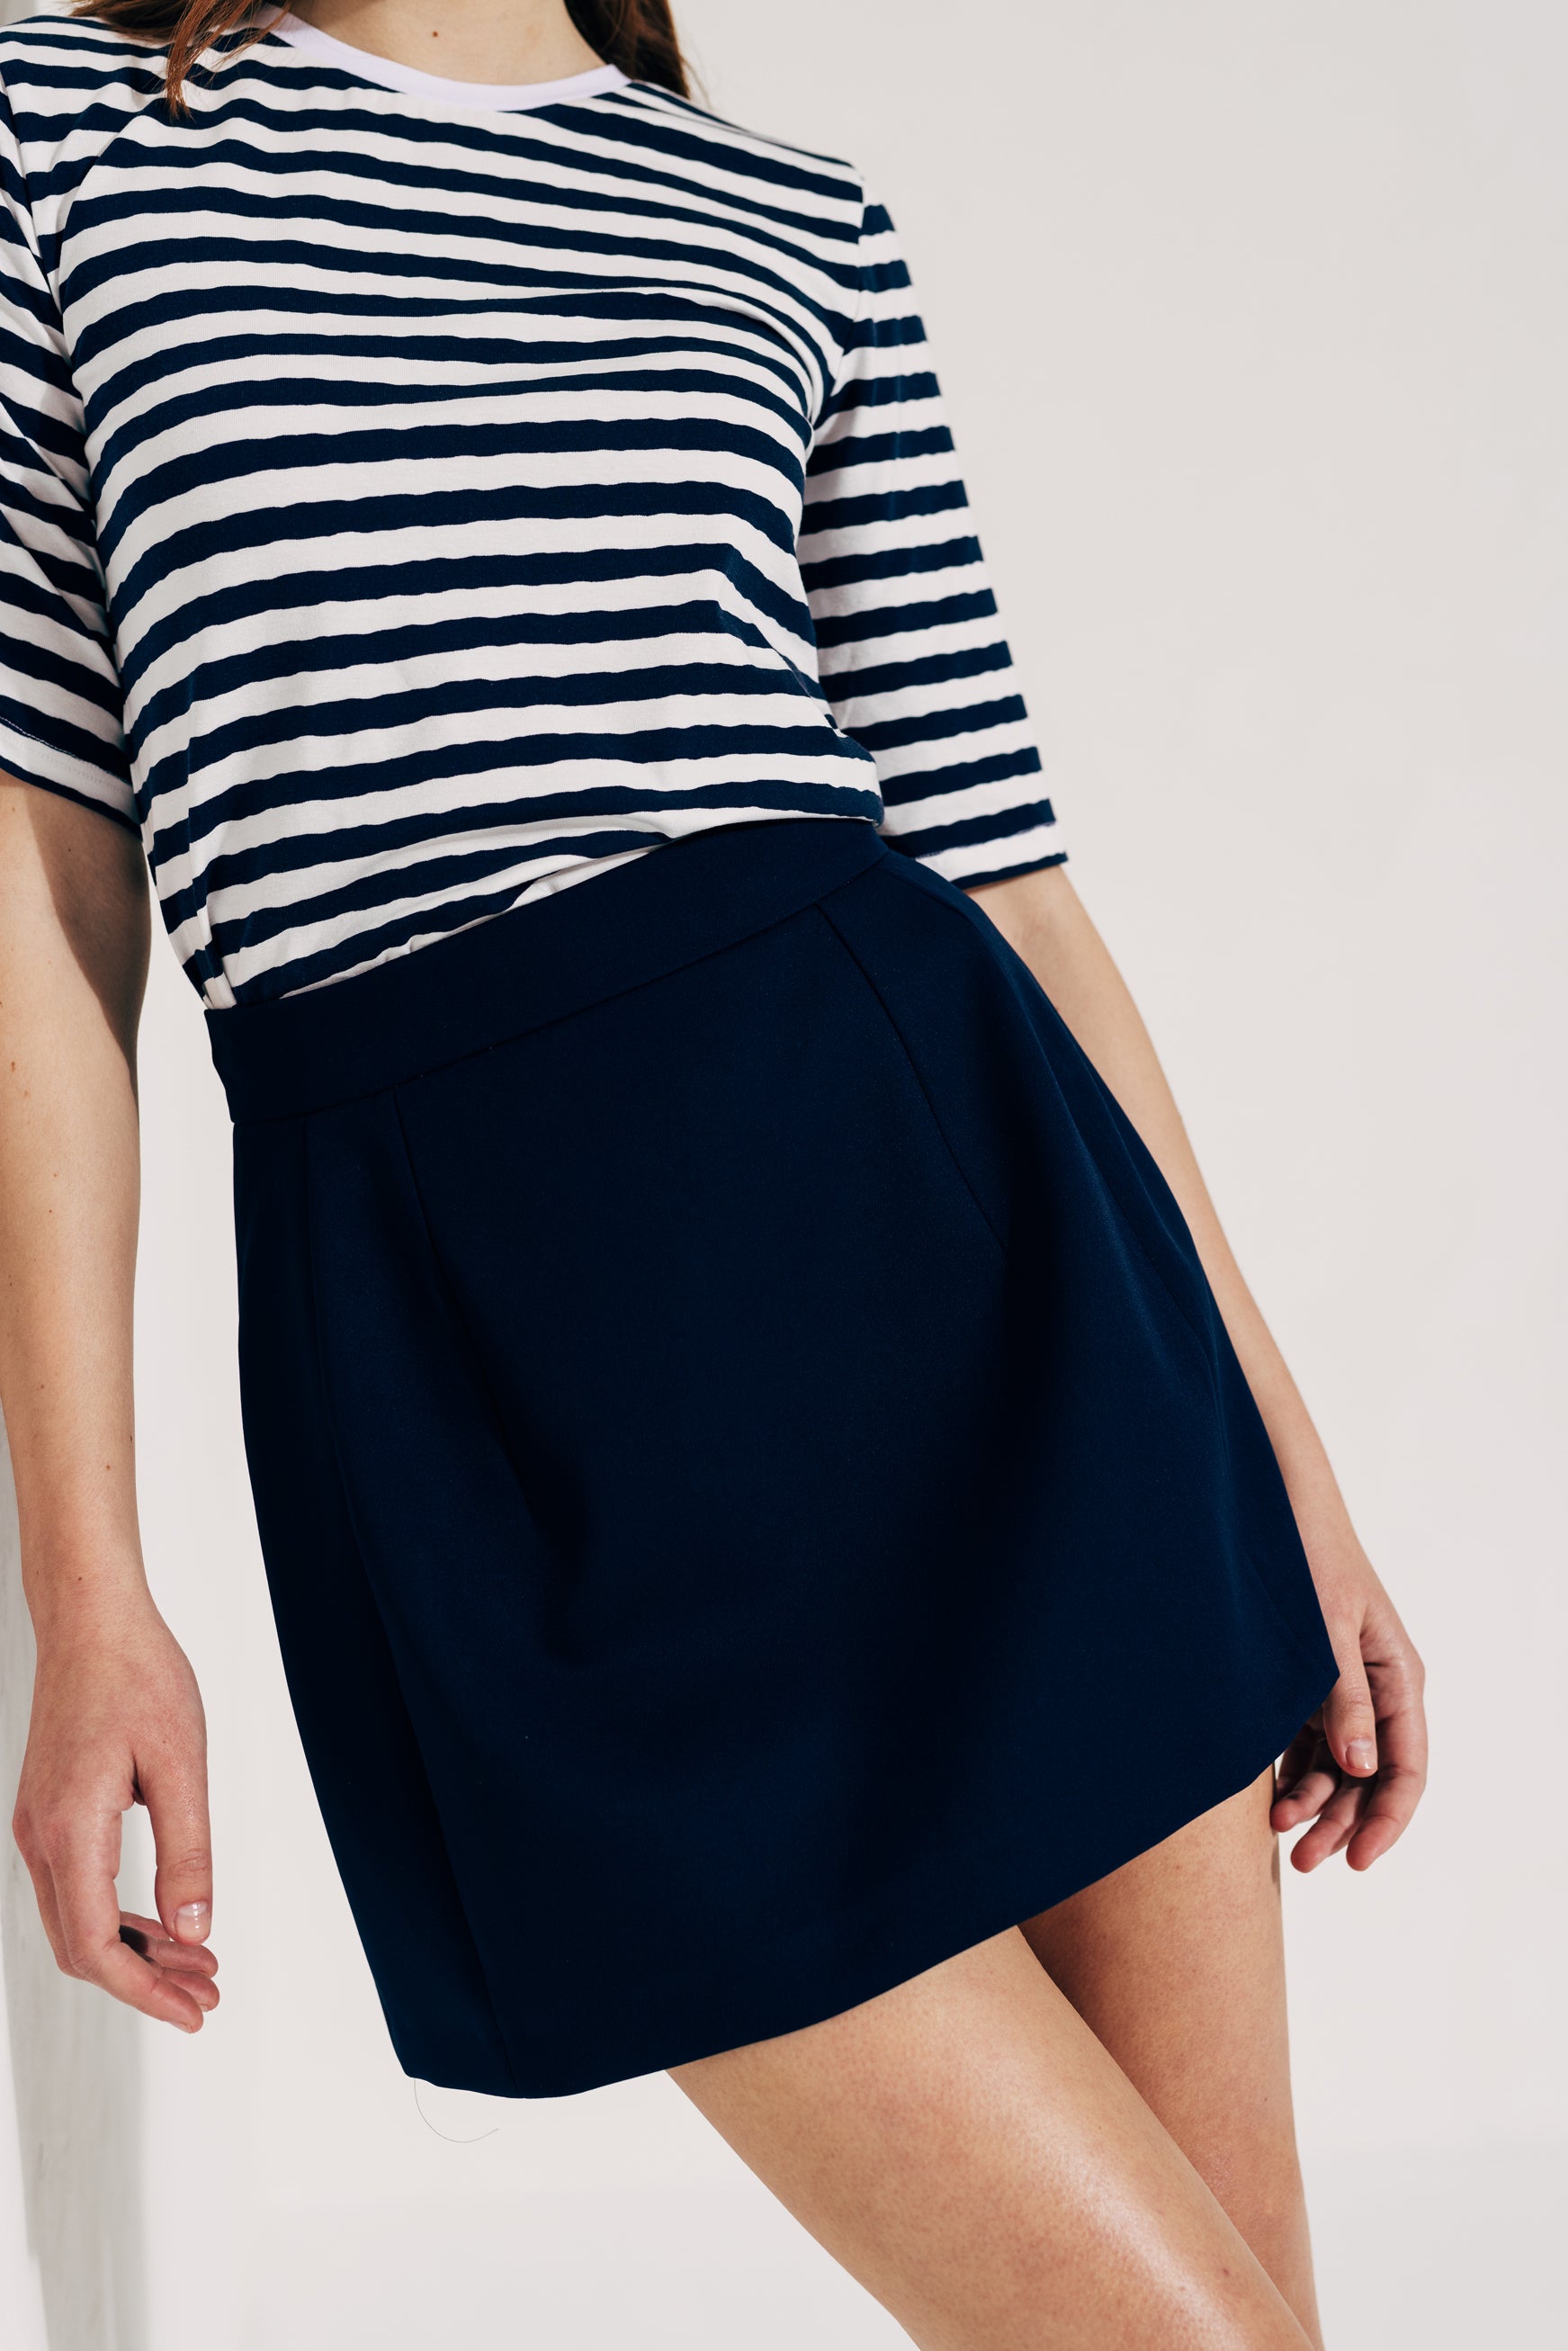 High-waist short skirt in dark navy blue